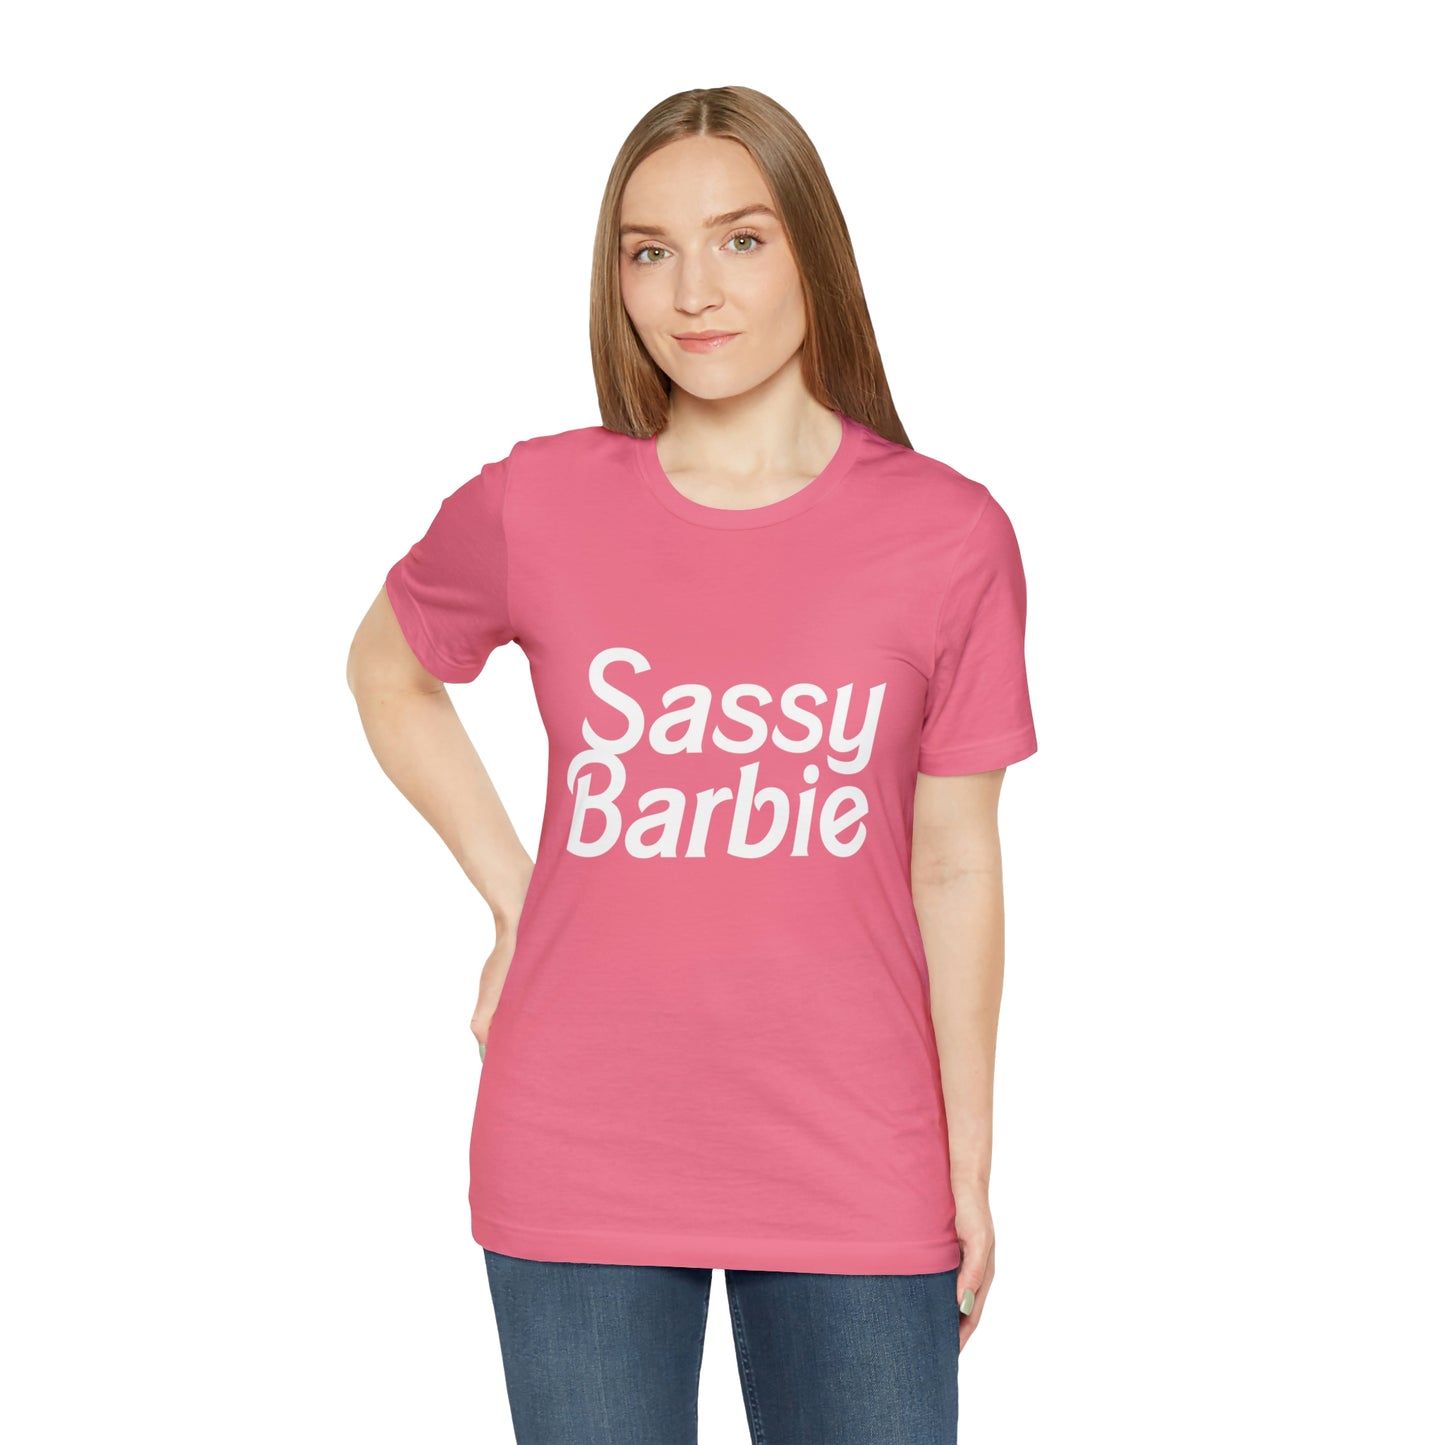 Sassy Barbie